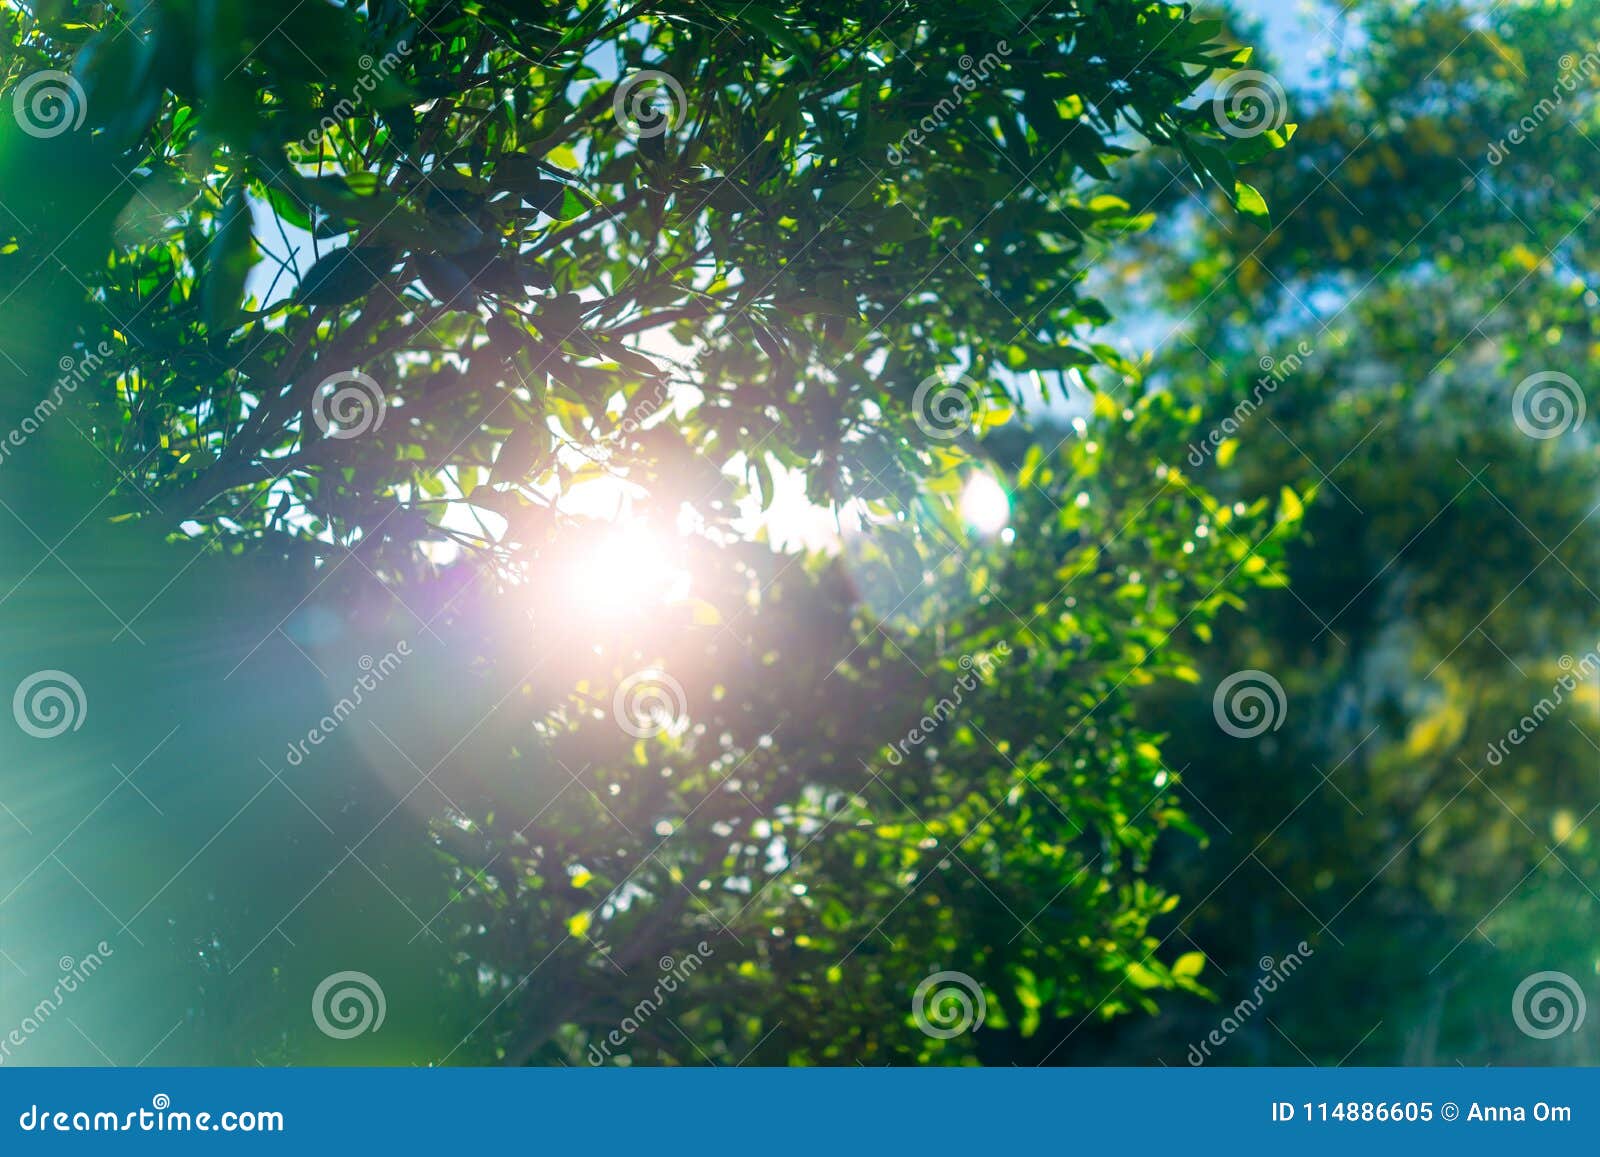 Fresh green tree foliage stock image. Image of garden - 114886605